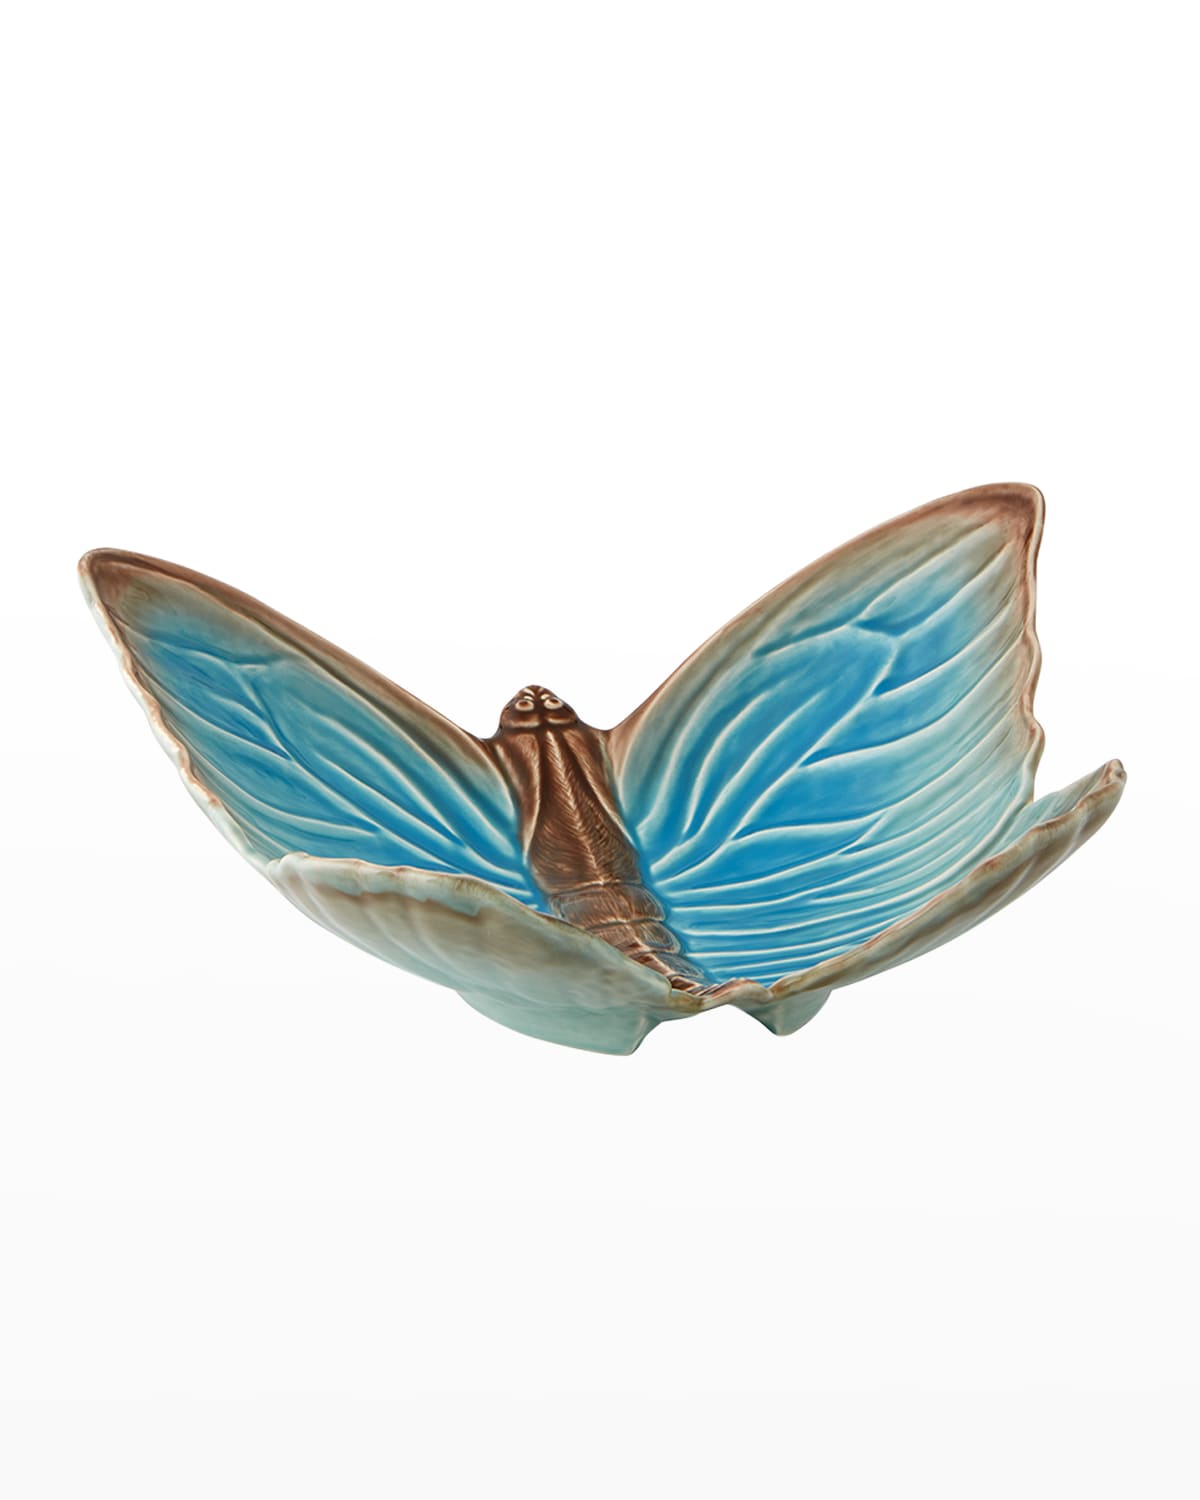 Cloudy Butterflies Fruit Bowl by Claudia Schiffer, 16"